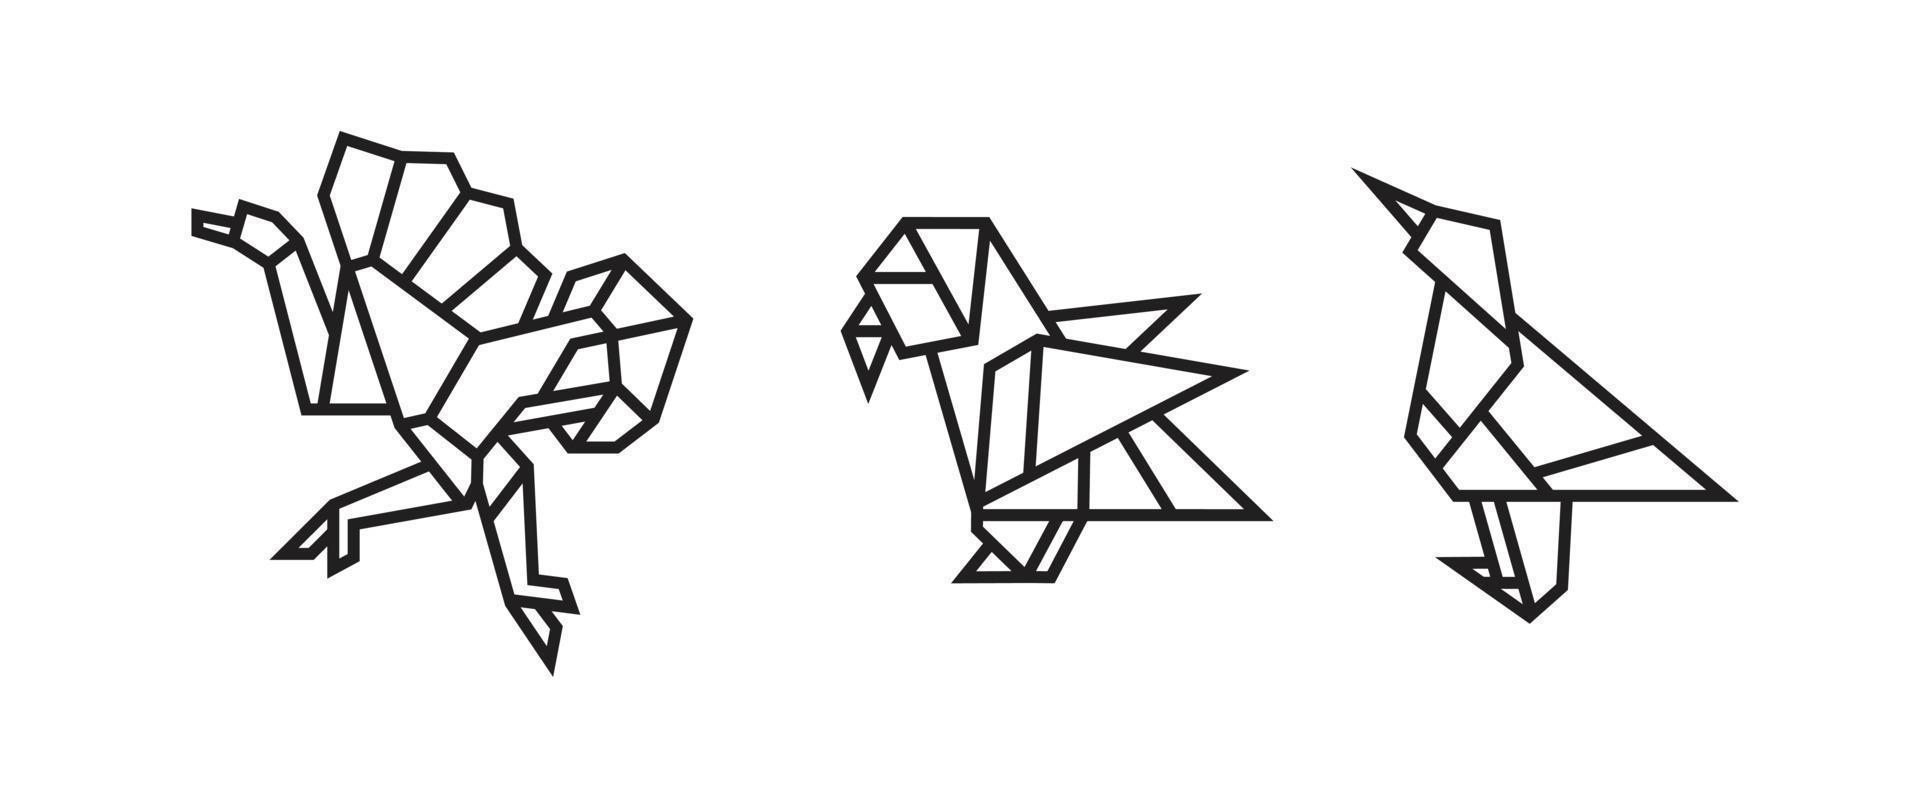 Bird illustrations in origami style vector